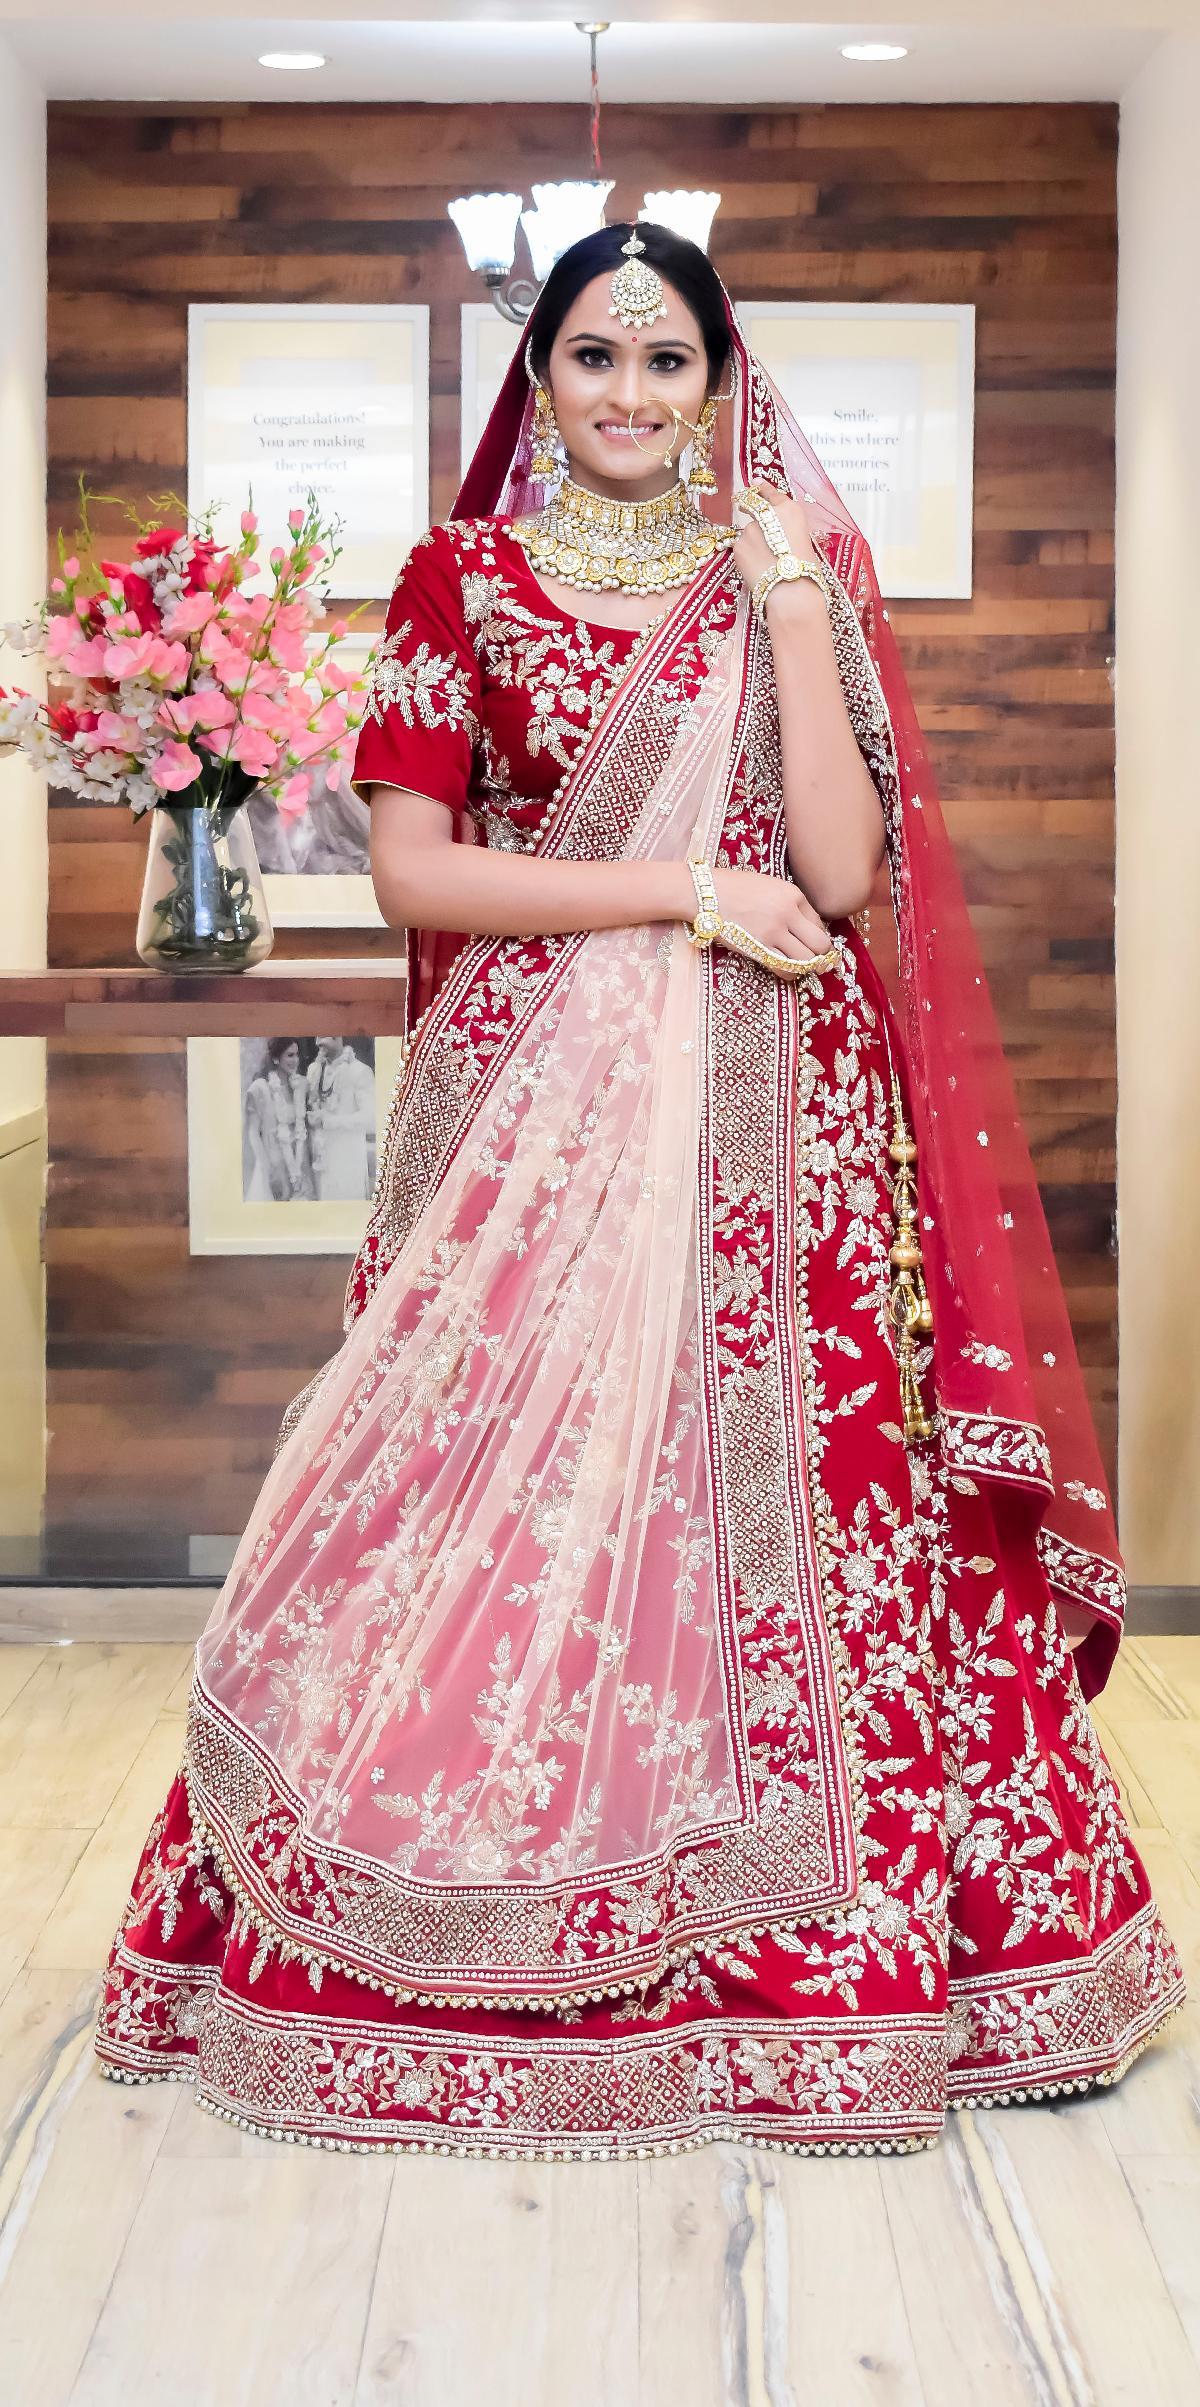 Reshma yashpal Gupta - Bridal lehenga Dresses and Jewellery Available on  Rent Srishti Boutique &Rental Manali ❤❤❤❤❤ . . Contact us for Rental  Dresses 7018361235 *Bridal Lehenga &Jewellery👰 *Pre-wedding Gowns👩‍💼  *Party' wear